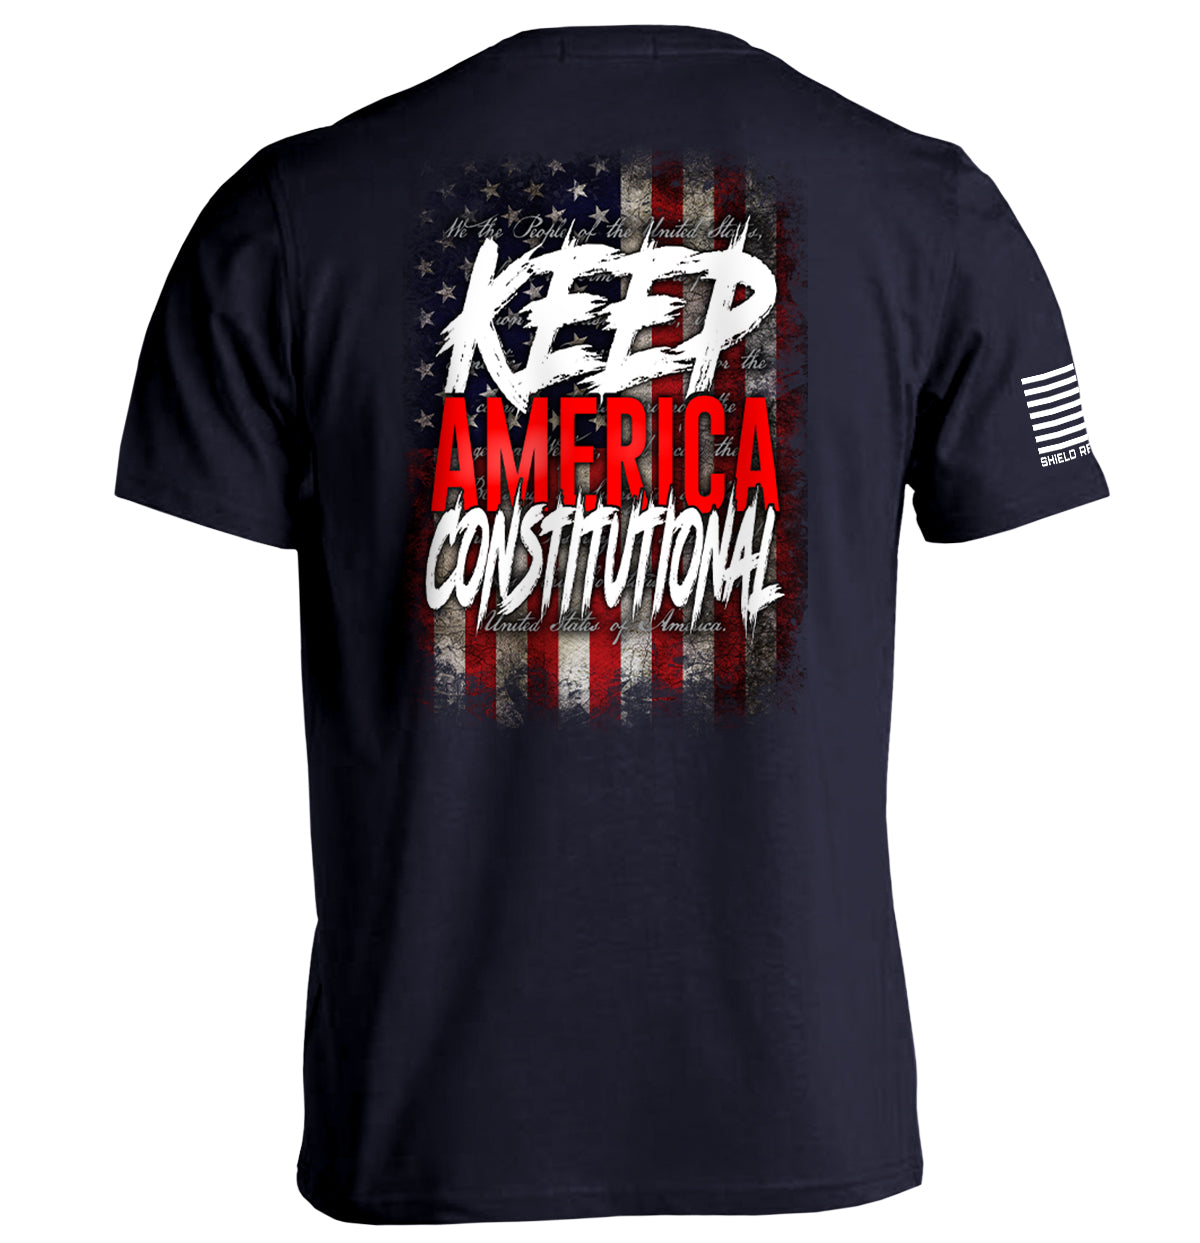 Keep America Constitutional